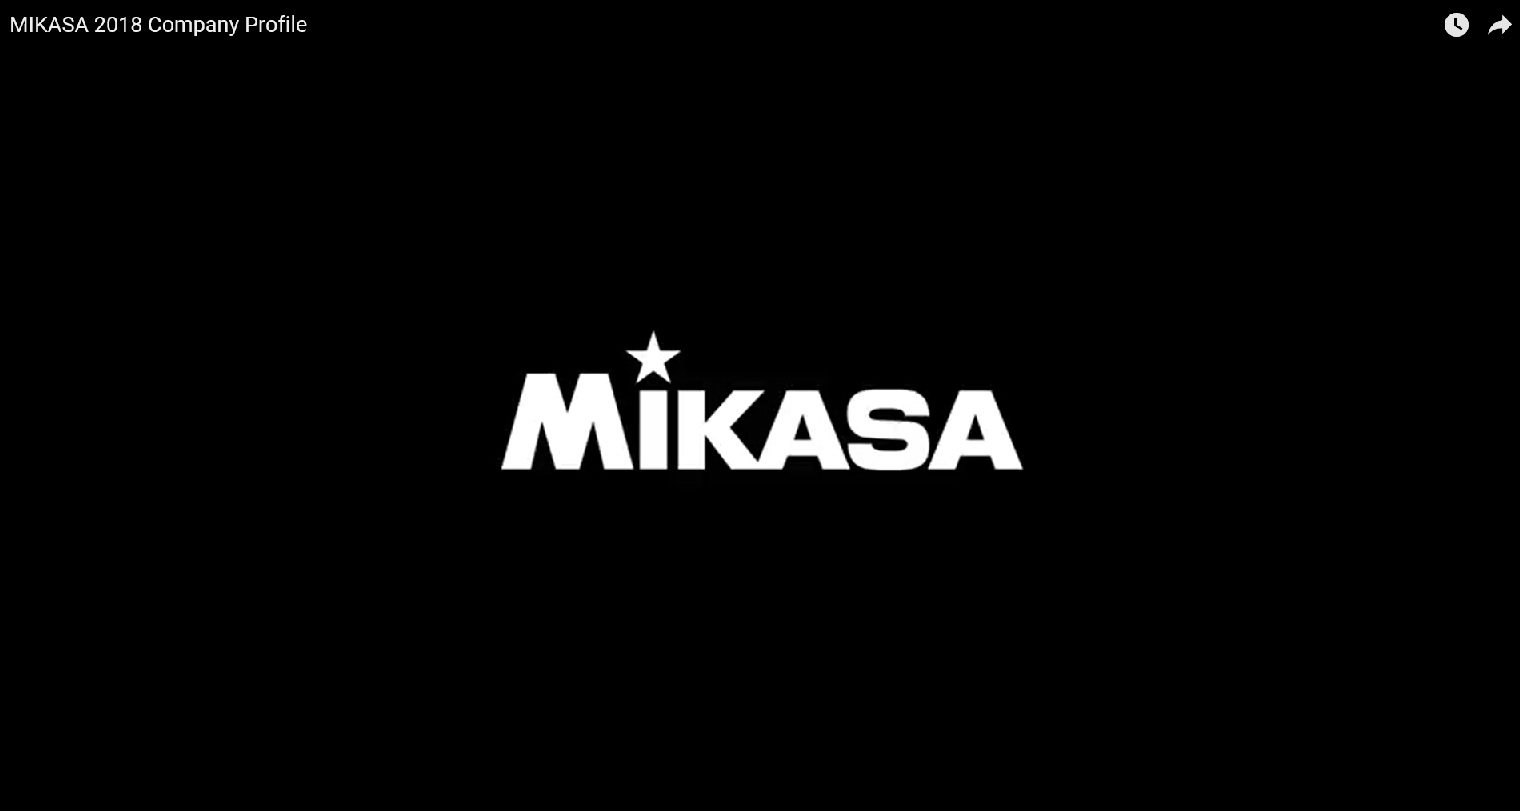 Mikasa Company Profile 2018-1